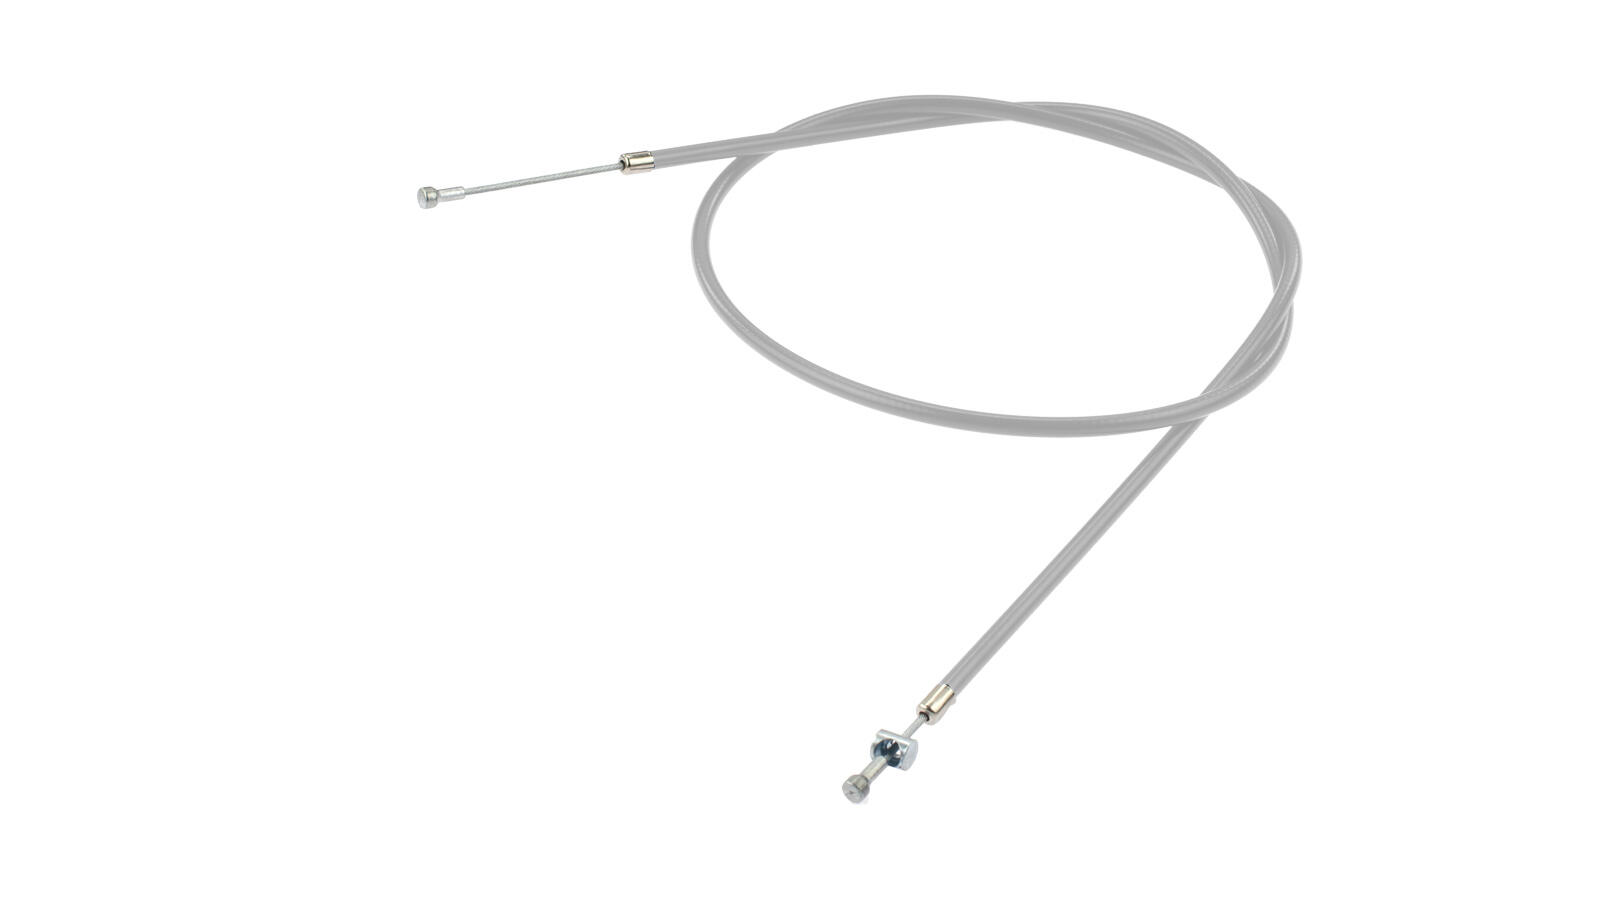 Kupplungszug grau für Simson SR4-1 Si K grau (Motoflex)